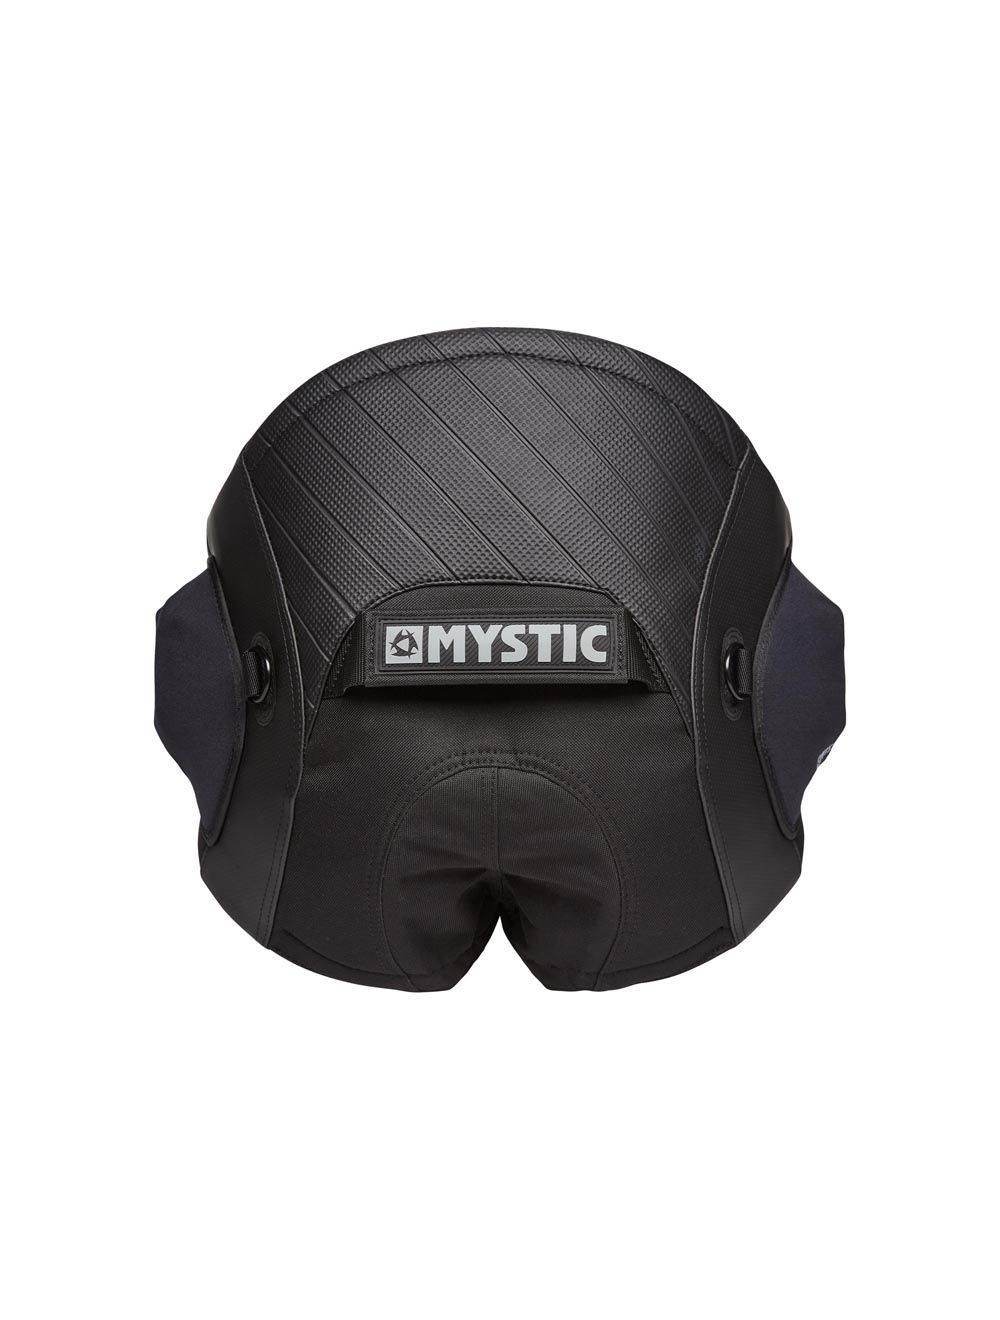 Mystic Trapez Driver Seat Sitztrapez Herren 900-Black 2021 